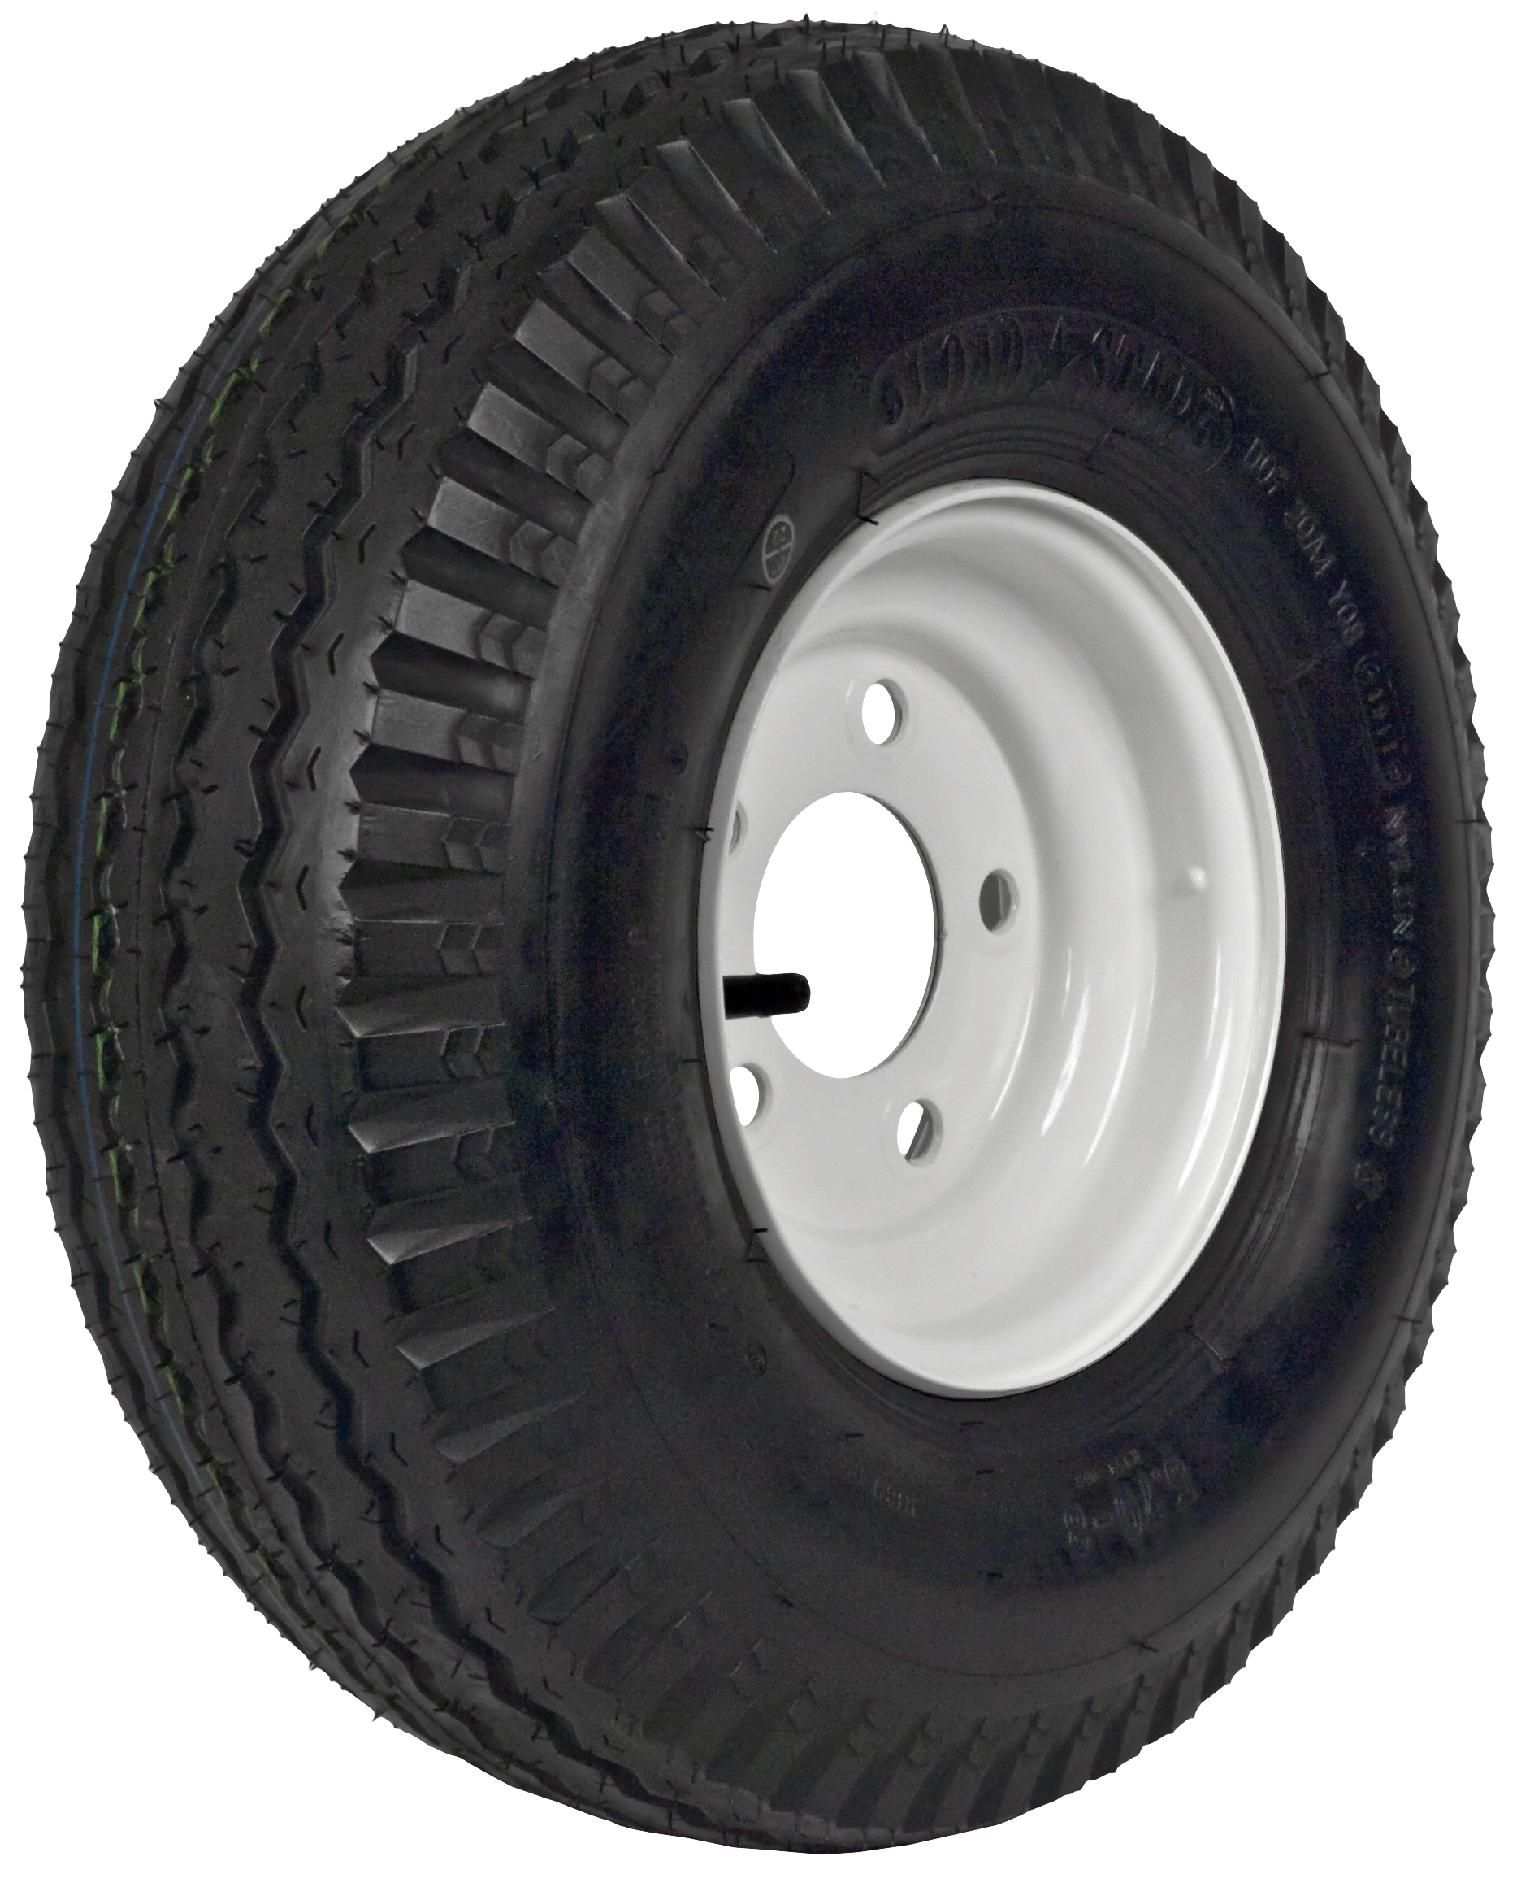 Loadstar DM508B-5I 570-8 LRB Trailer Tire and 5-Hole Wheel